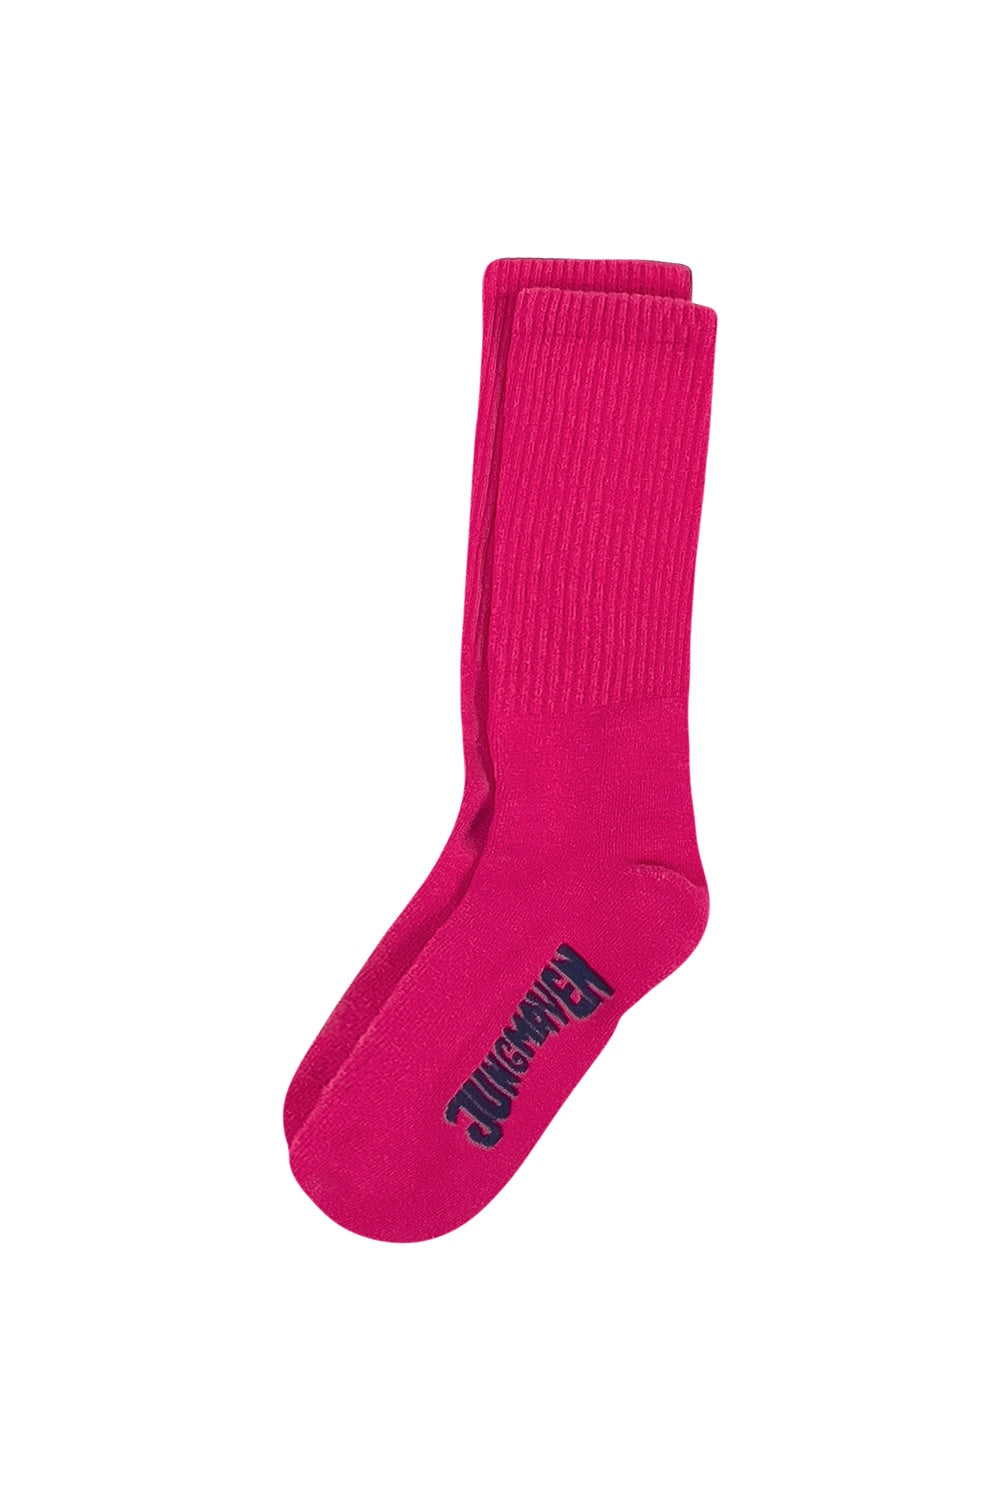 Hemp Wool Crew Socks | Jungmaven Hemp Clothing & Accessories / Color: Pink Grapefruit